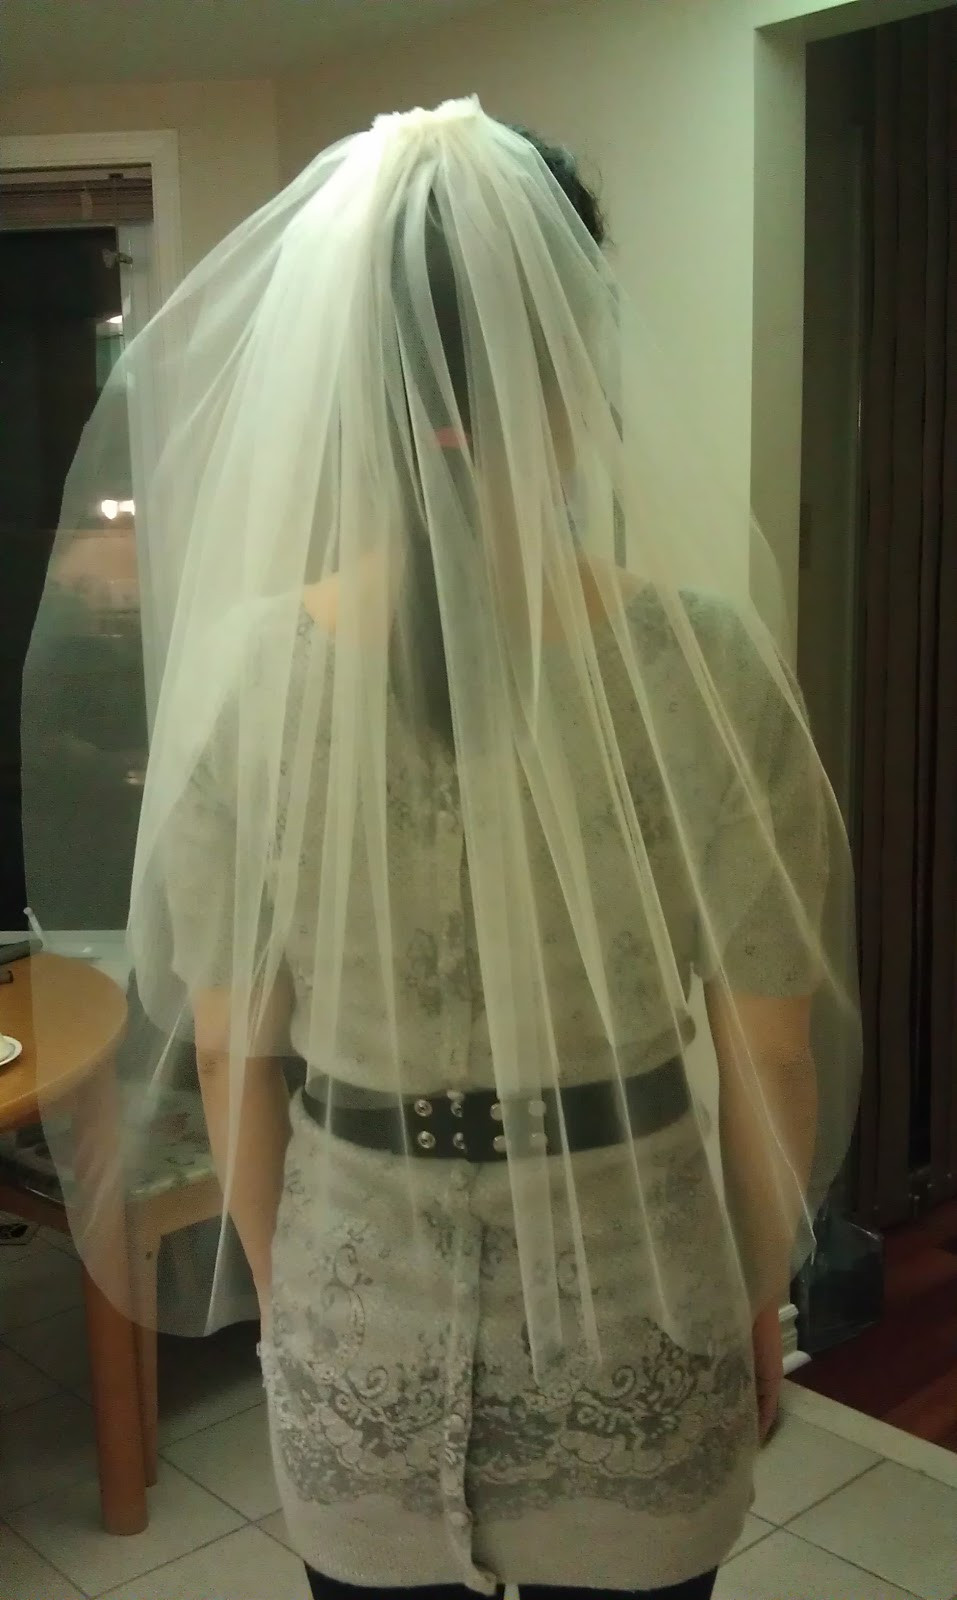 Best ideas about DIY Wedding Veil
. Save or Pin SugarRockCatwalk DIY Basic Wedding Veil Under $10 Now.